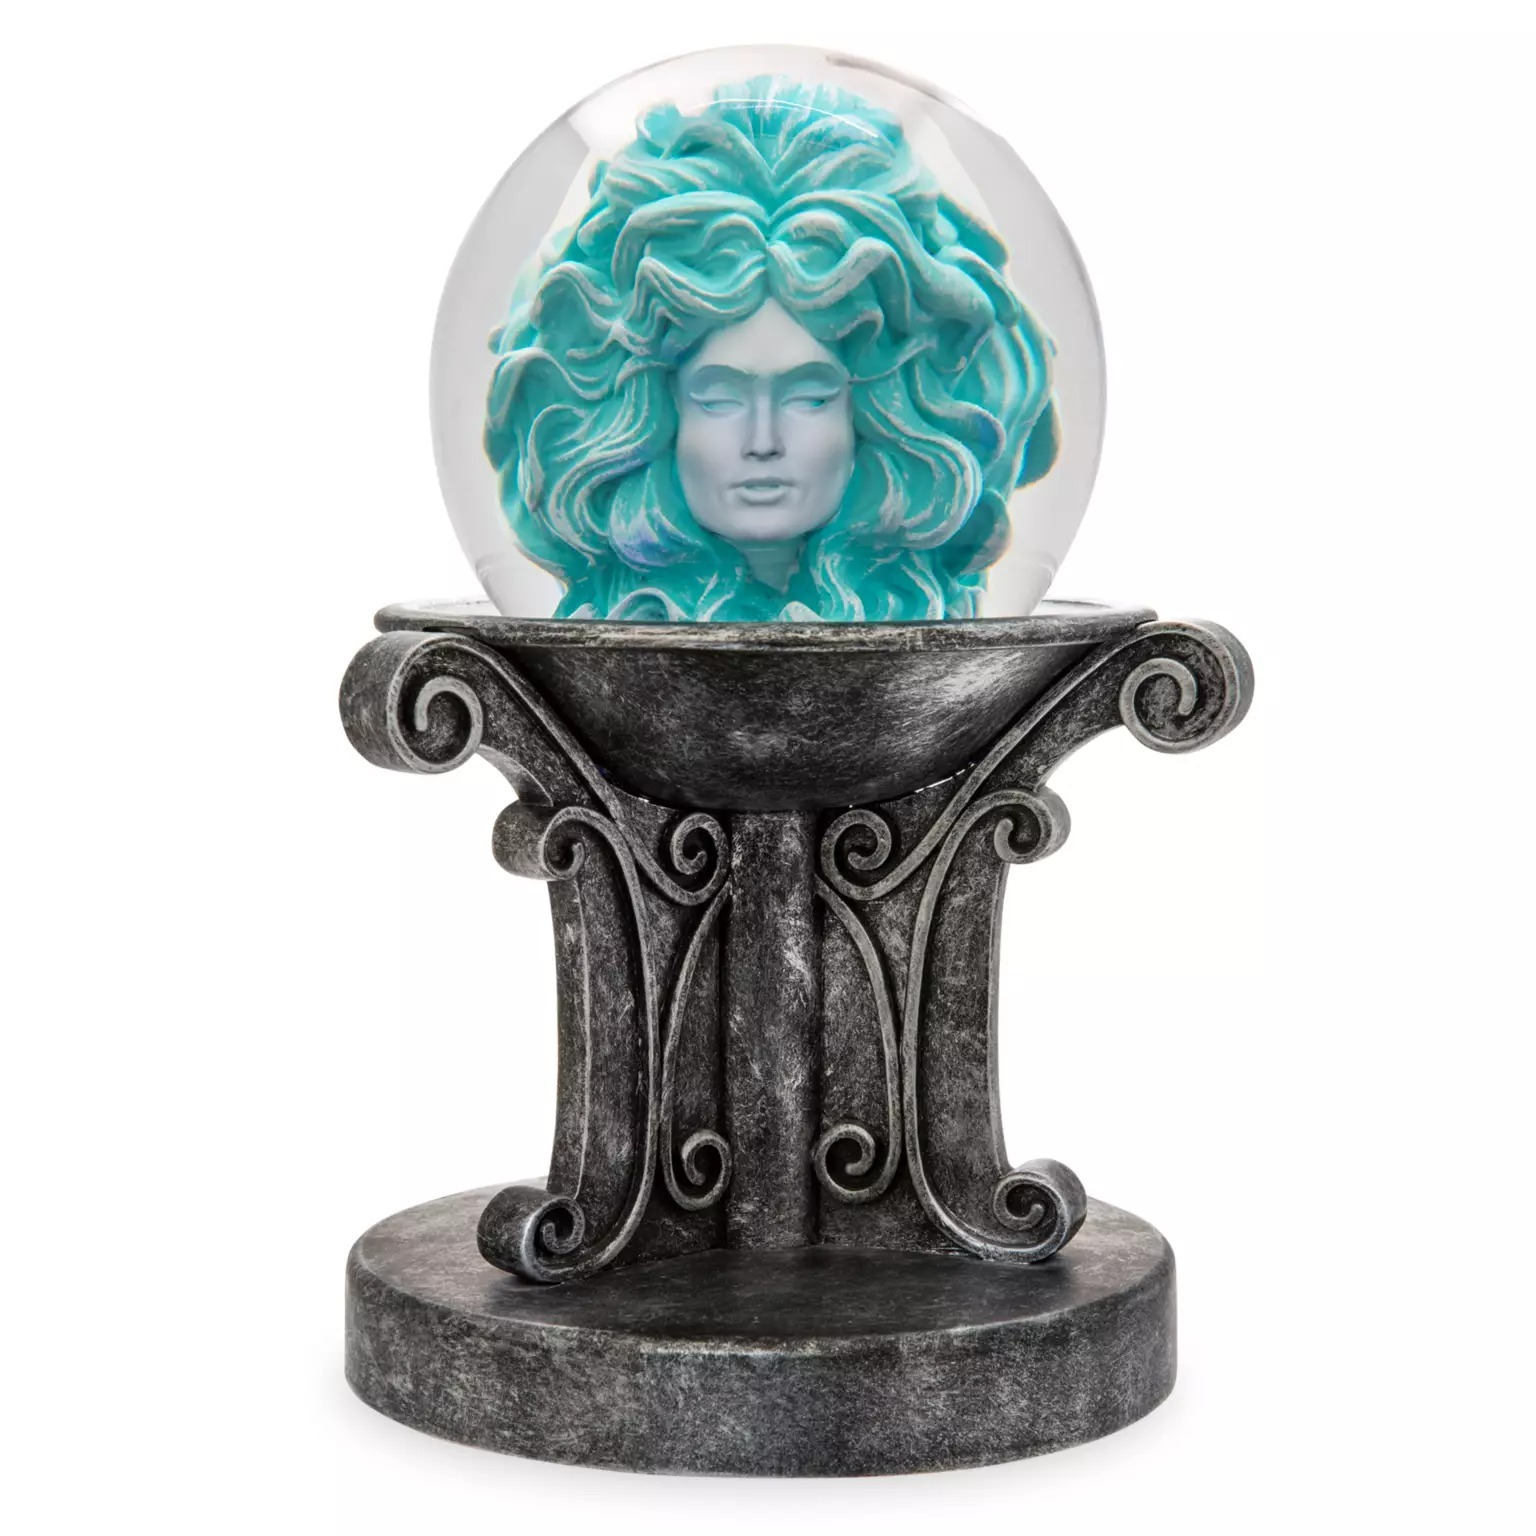 Disney: The Haunted Mansion - Madame Leota Lamp Figurine (Brand New)